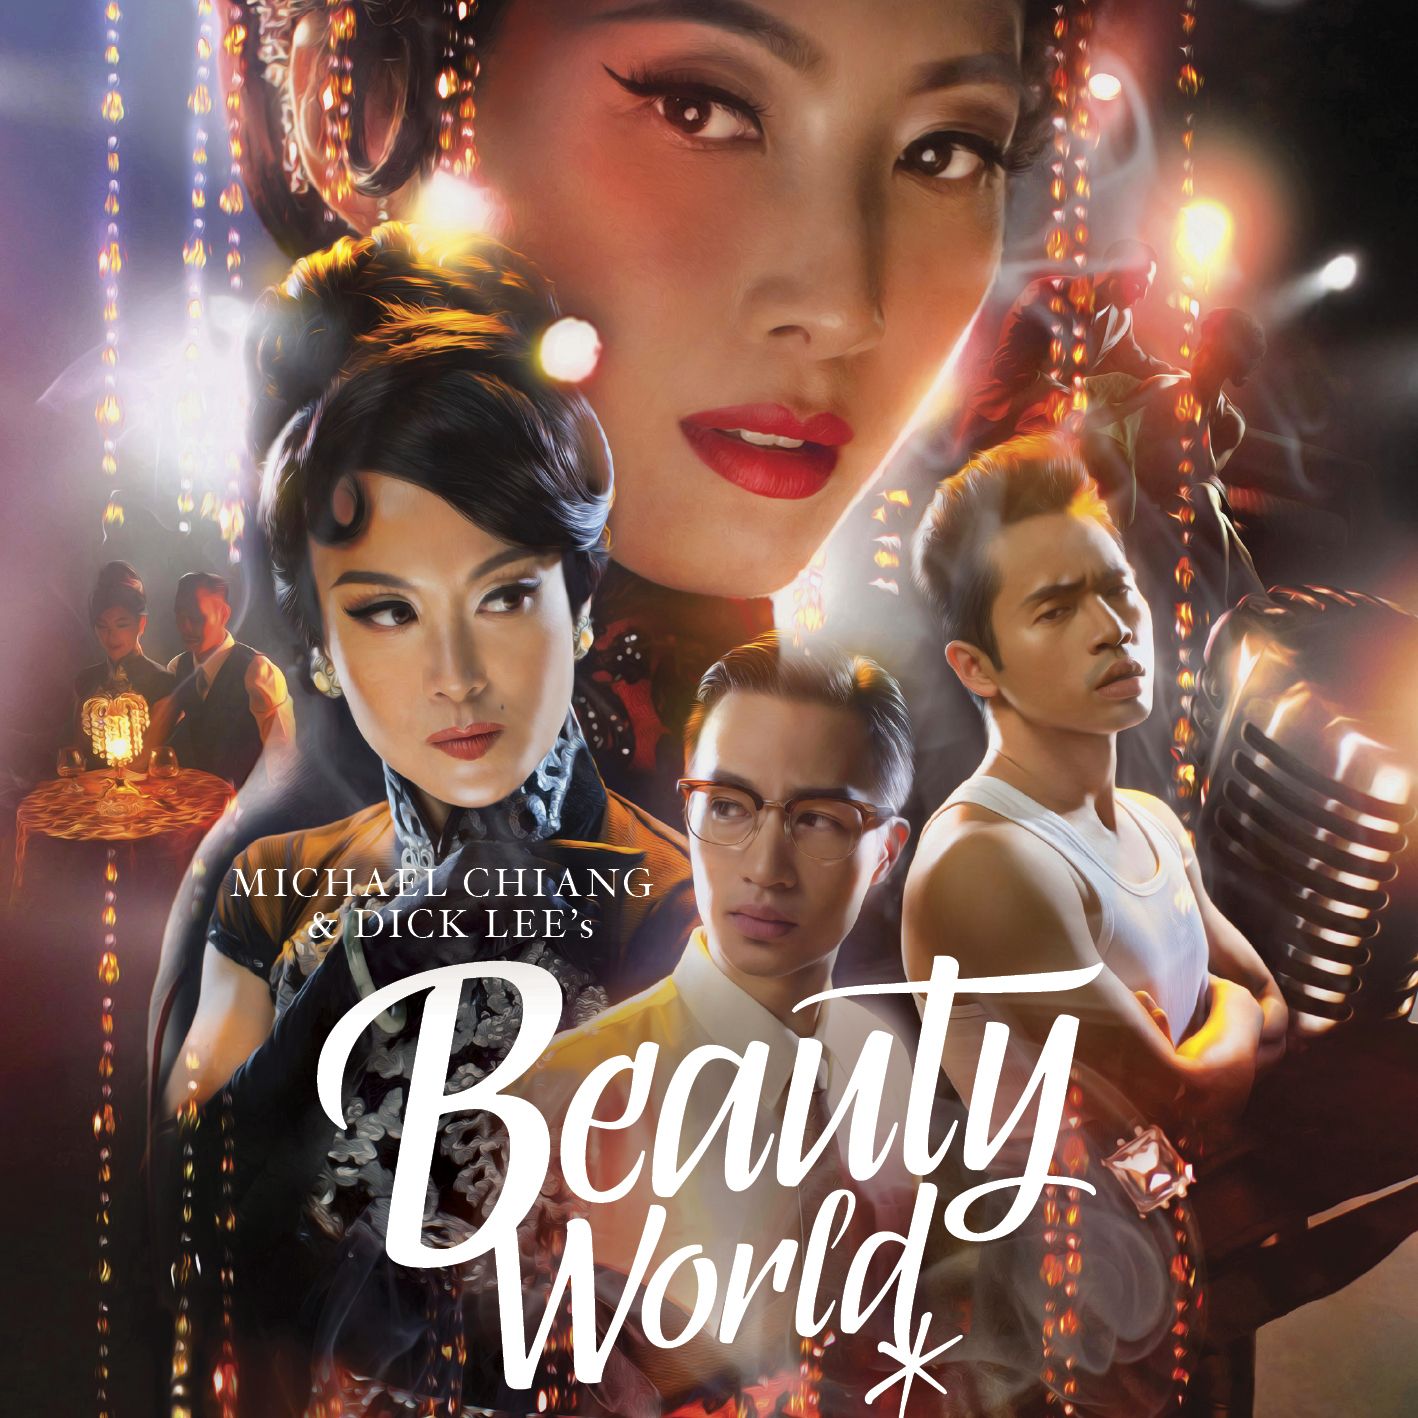 Michael Chiang & Dick Lee's Beauty World